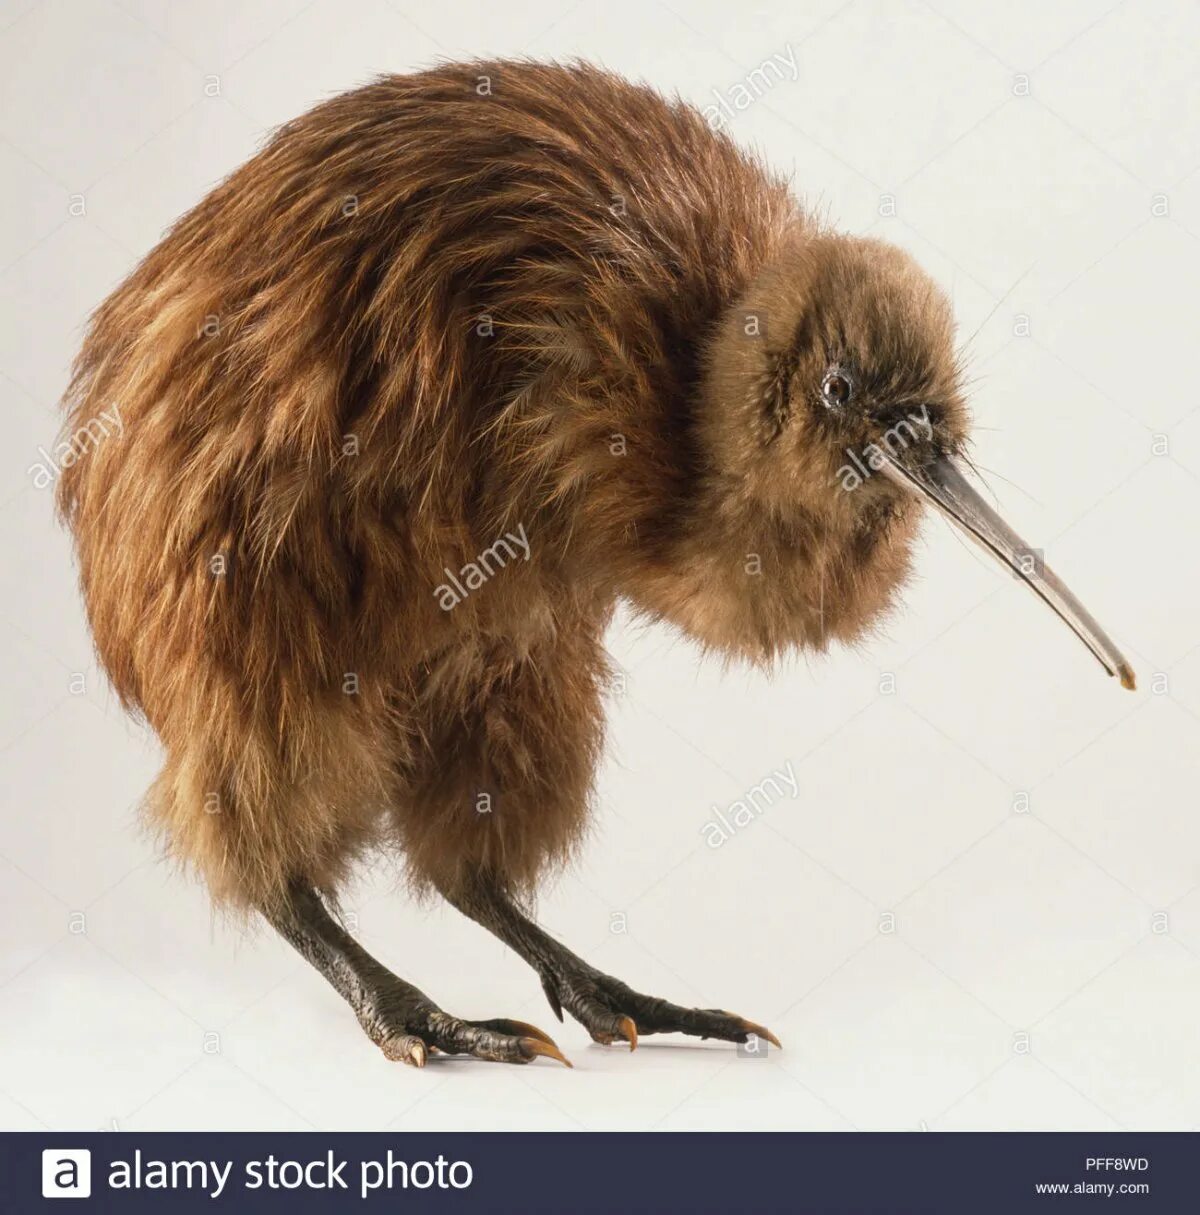 Остров киви. Киви птица. Птица киви птенец. Птица киви в Австралии. Apteryx haastii.